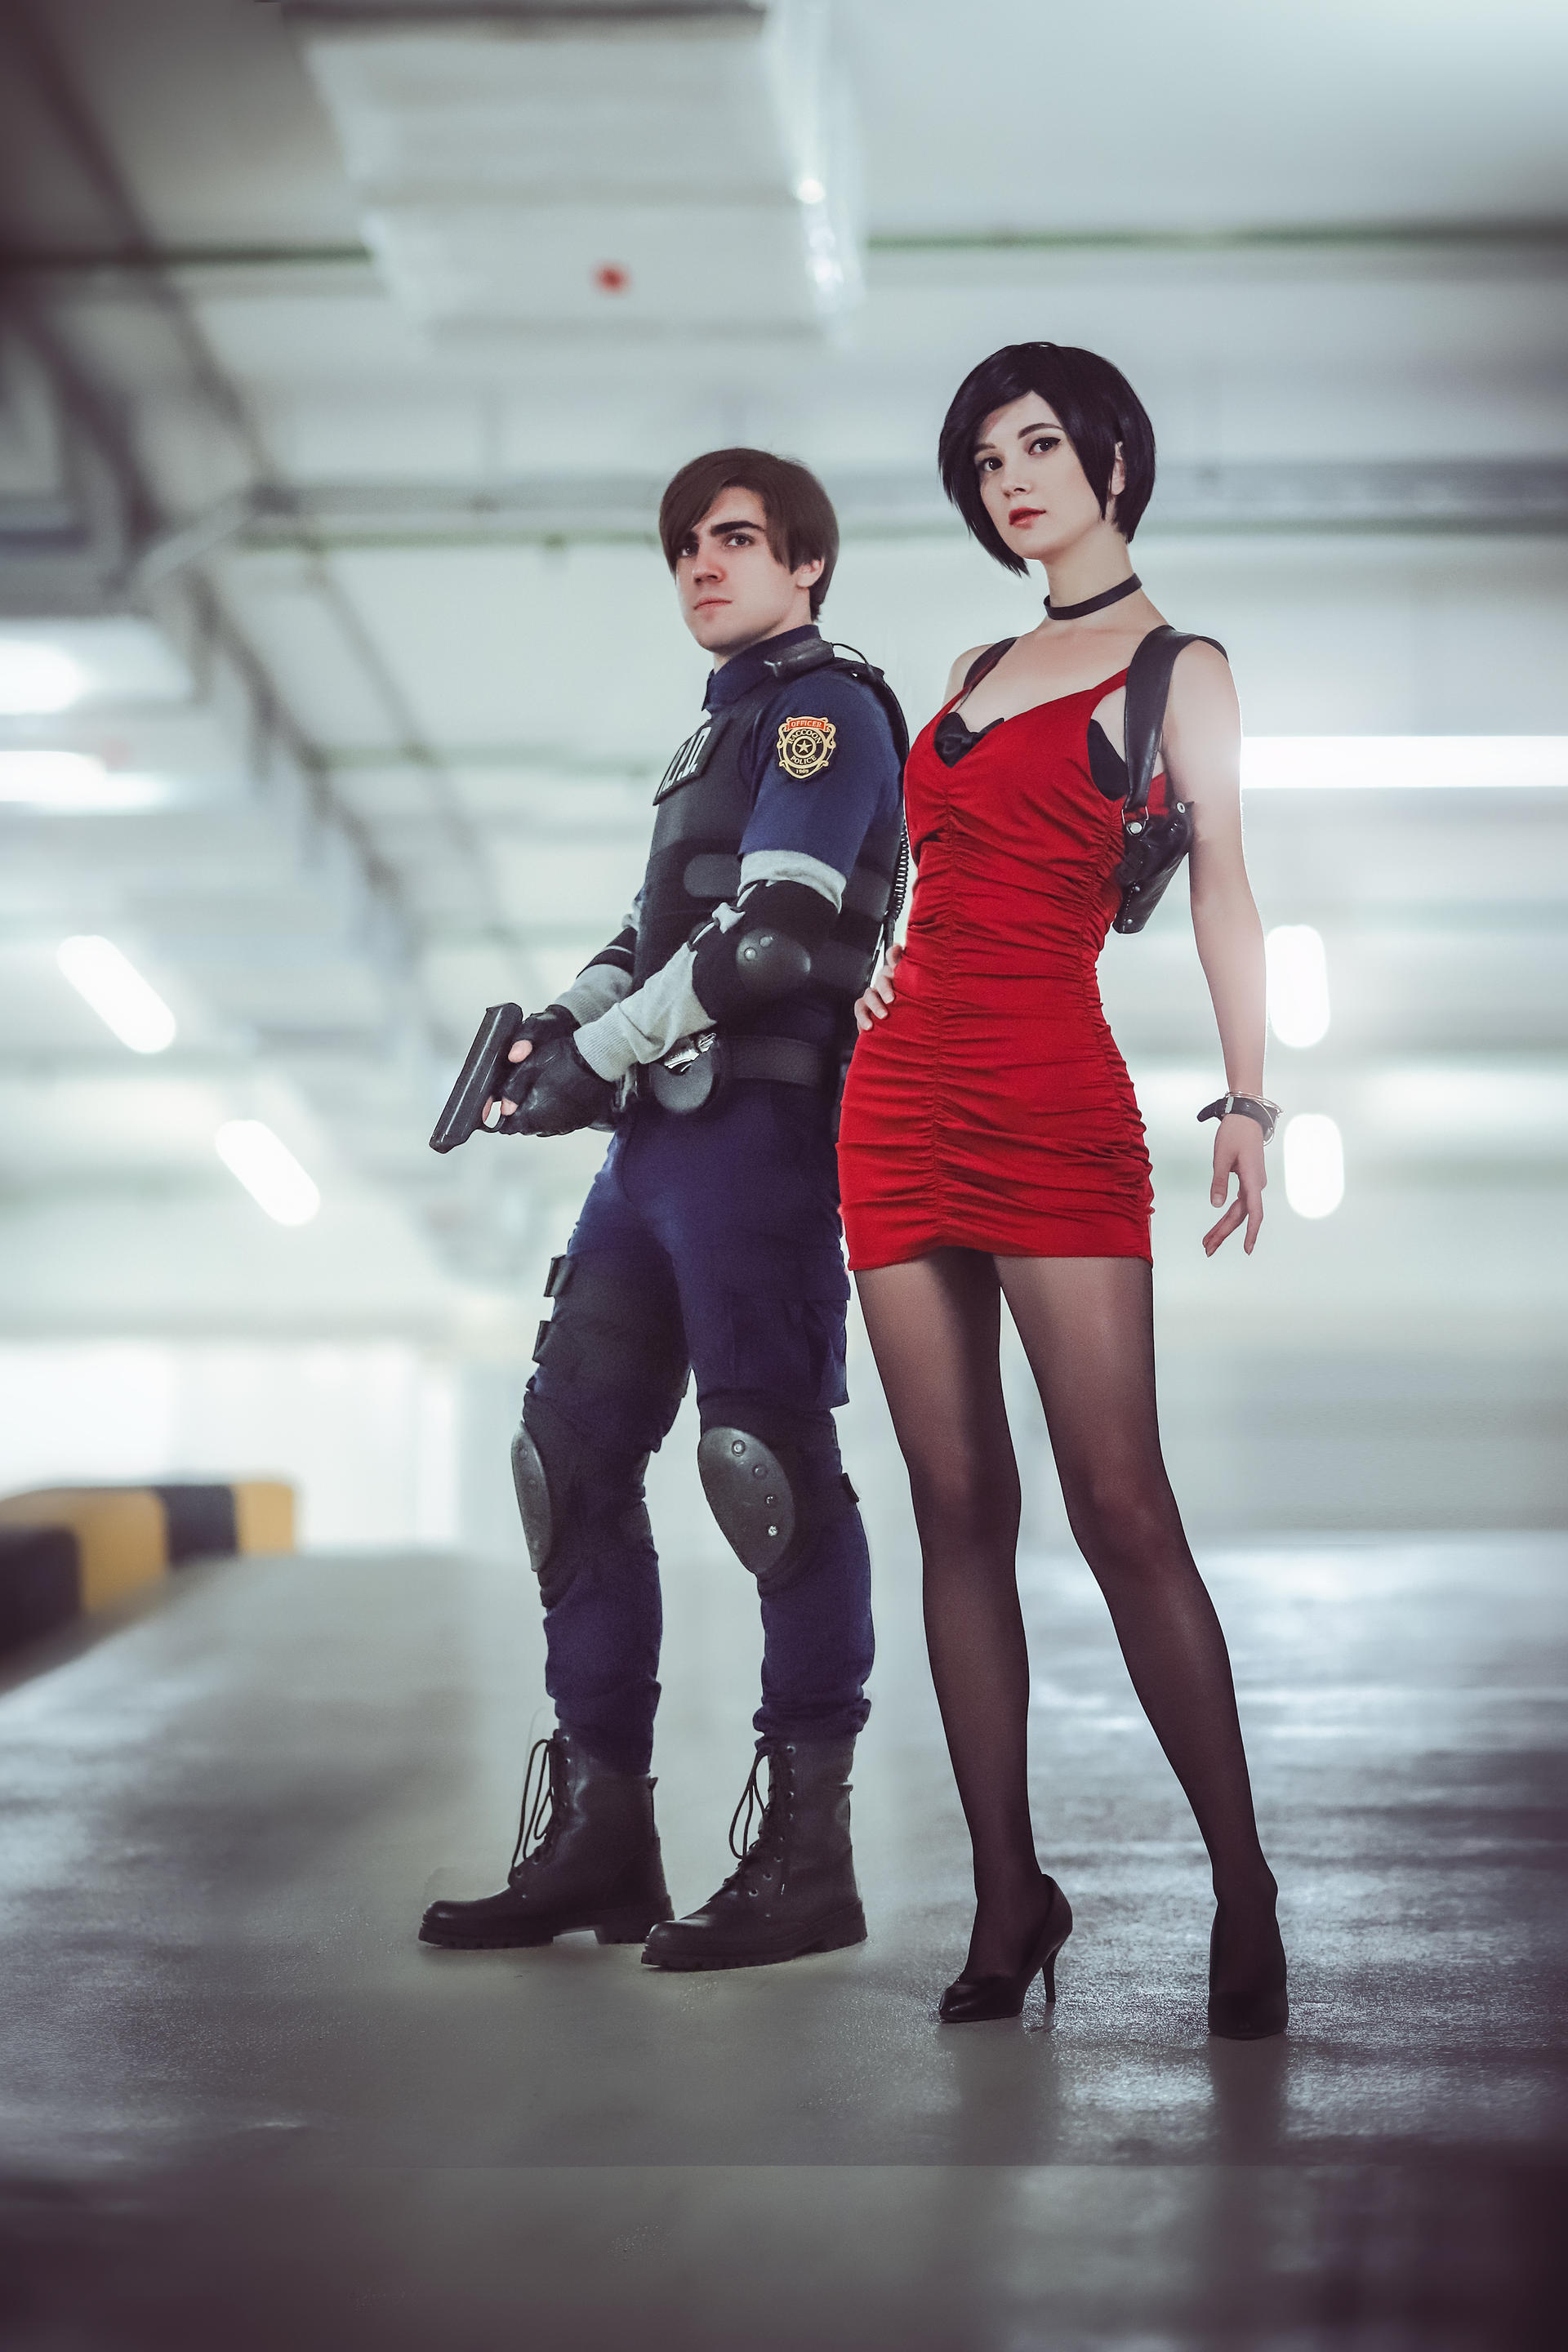 Resident Evil 2 Remake Ada Wong Cosplay Costume – FM-Anime